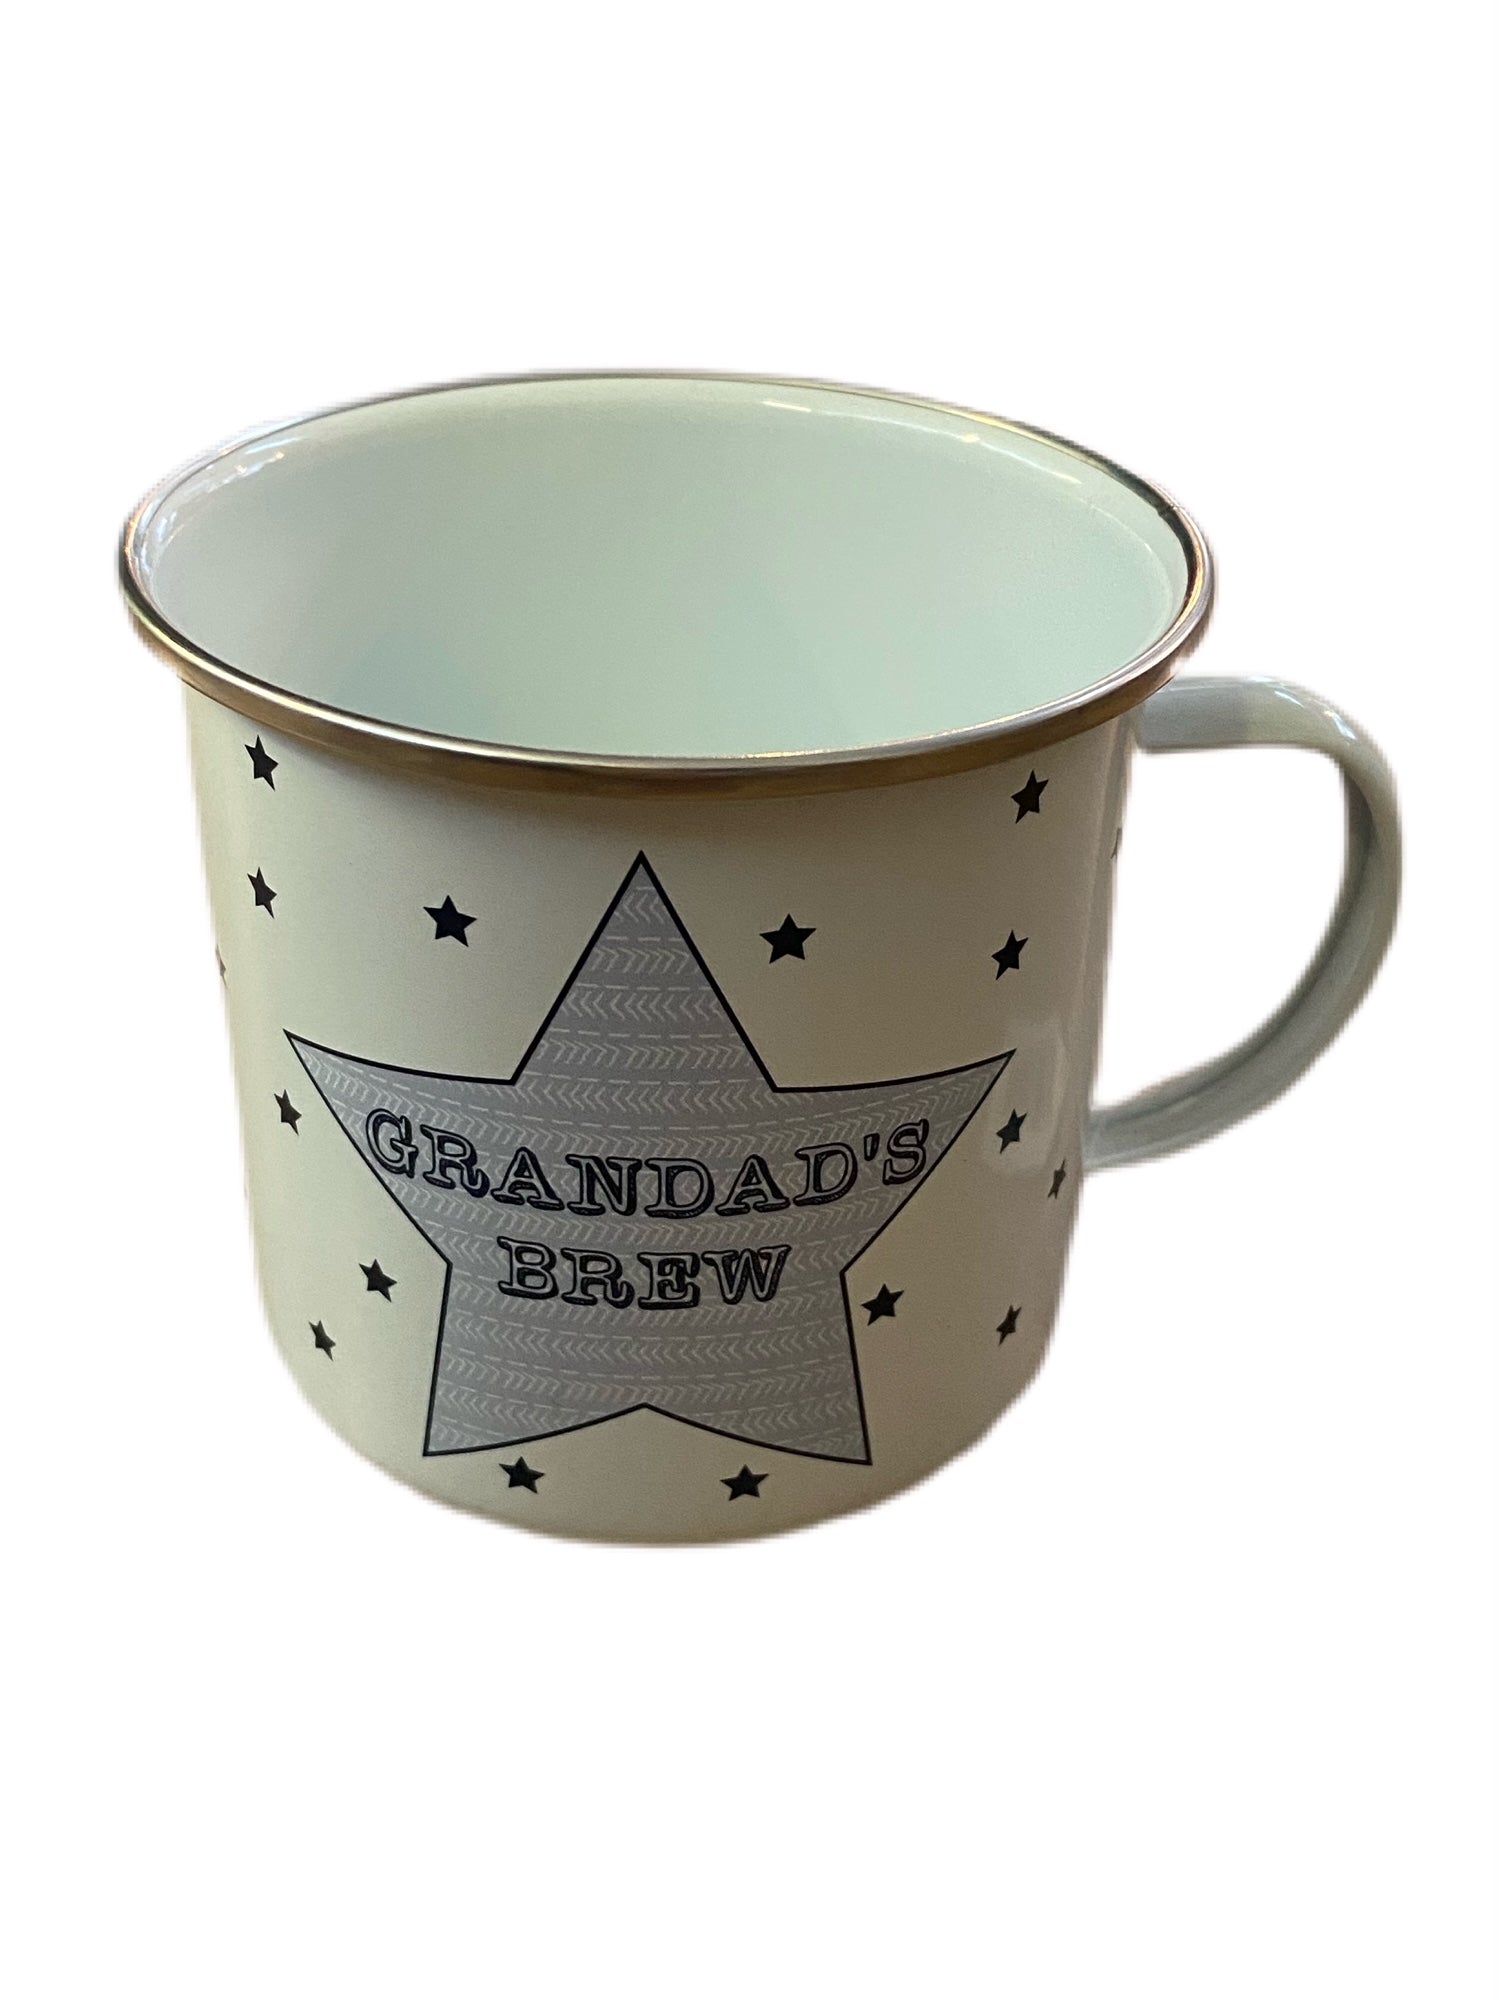 Grandad's Brew Enamel Mug in Blue and White - The Cooks Cupboard Ltd